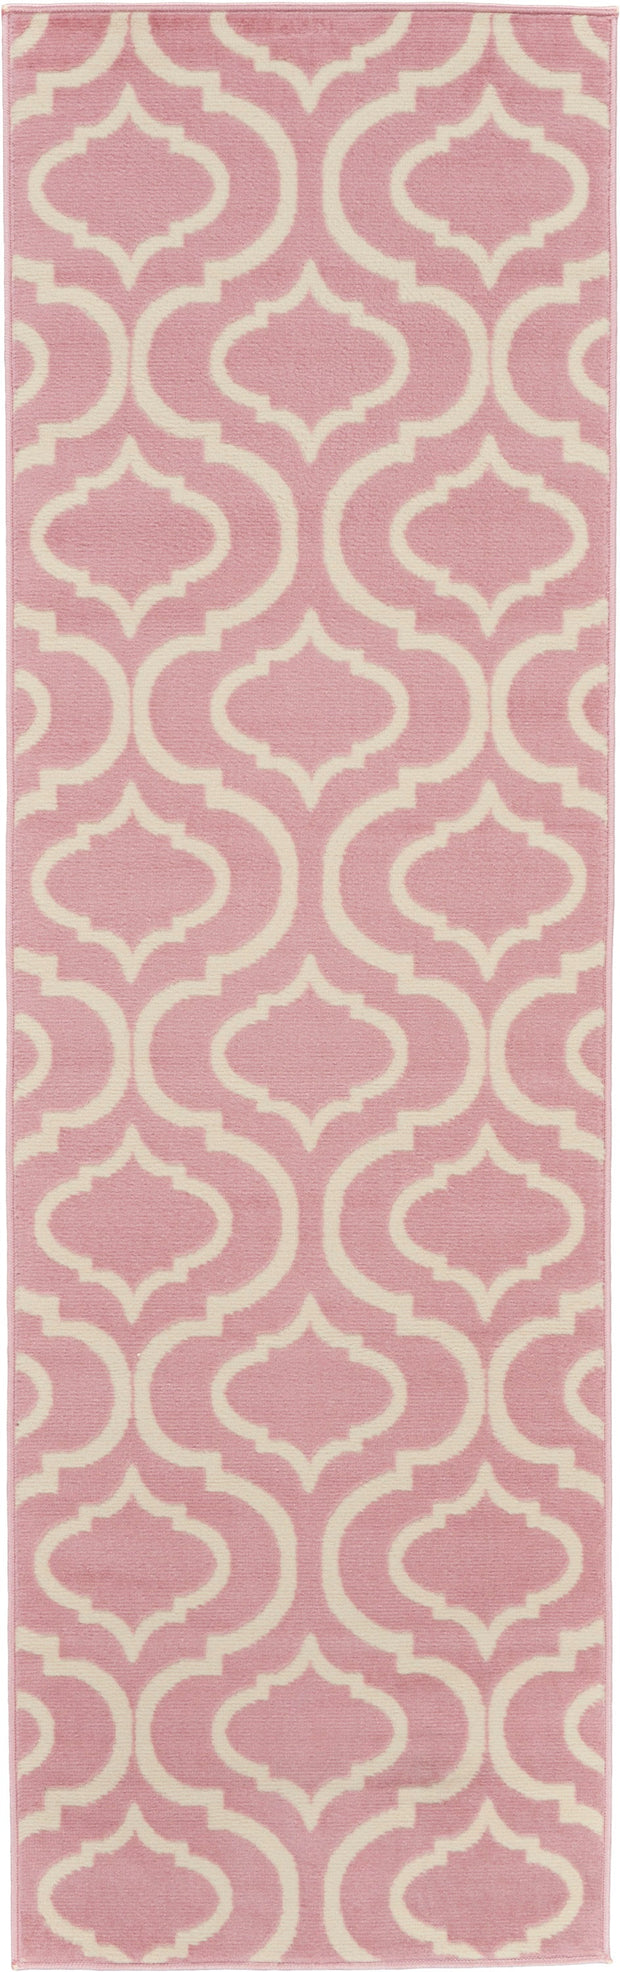 jubilant pink rug by nourison 99446479877 redo 3